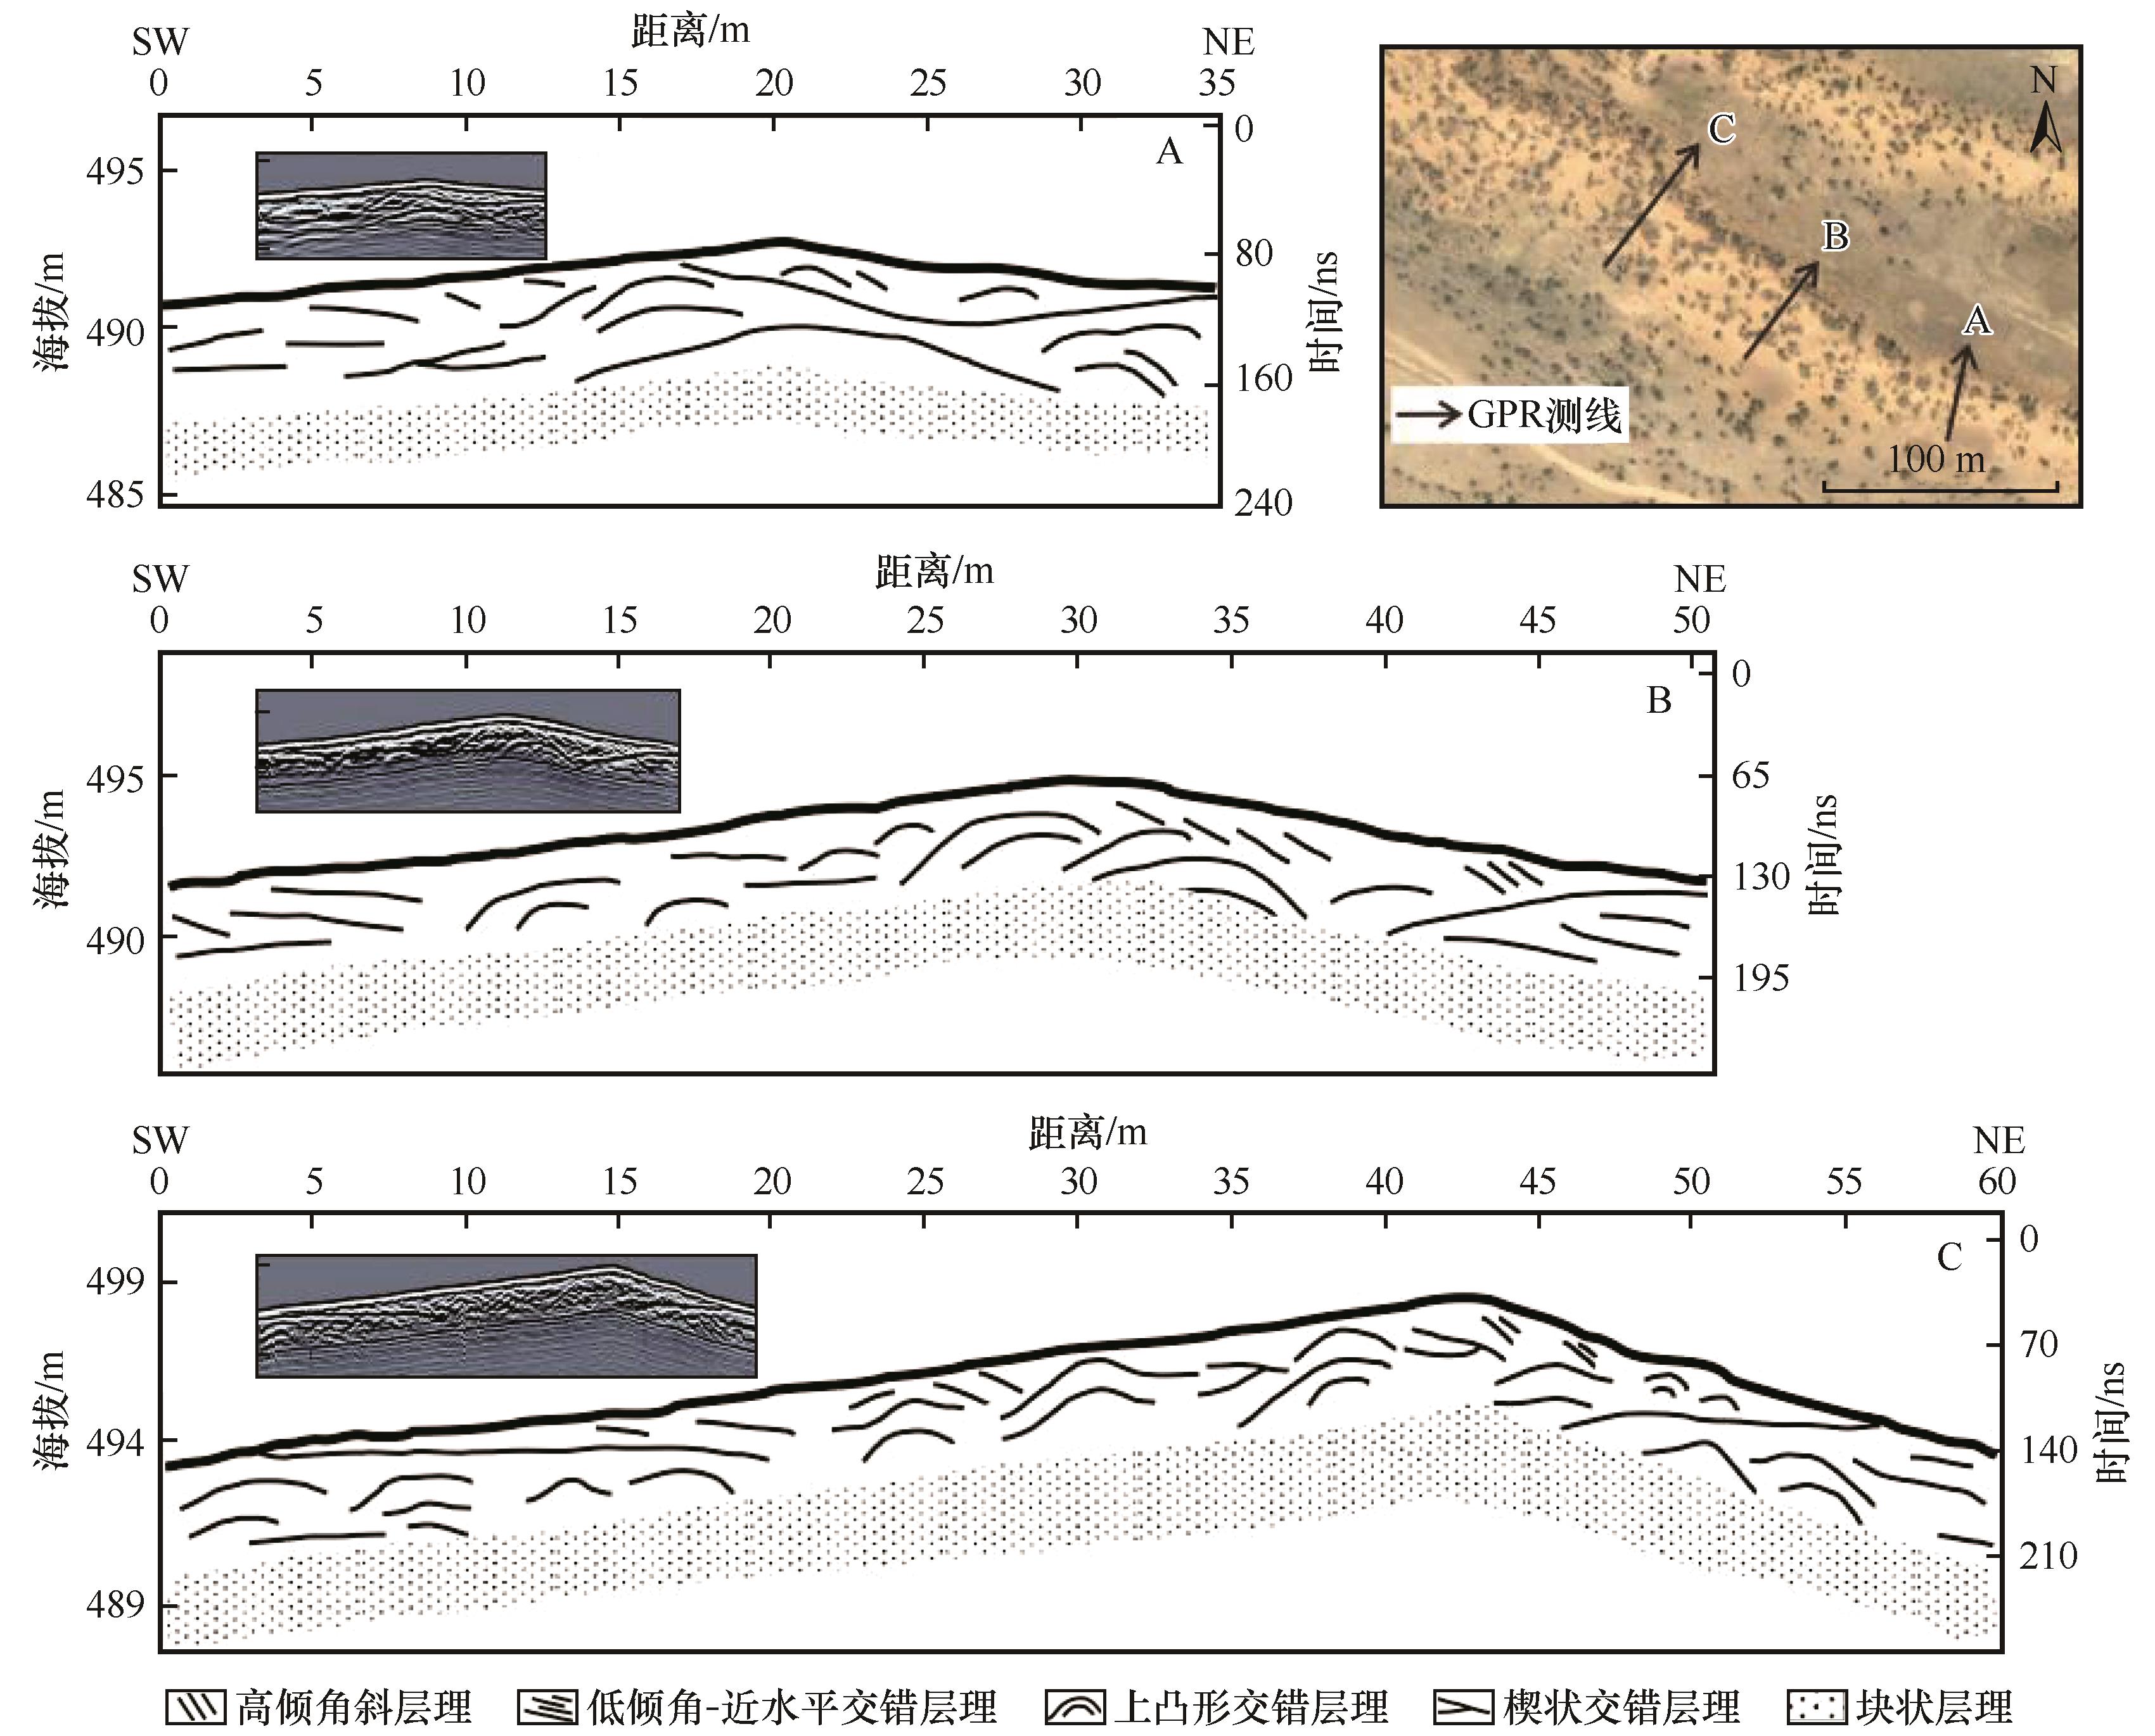 Preliminary study on sedimentary structure and development model of vegetated linear dune in the southeastern Gurbantunggut Desert